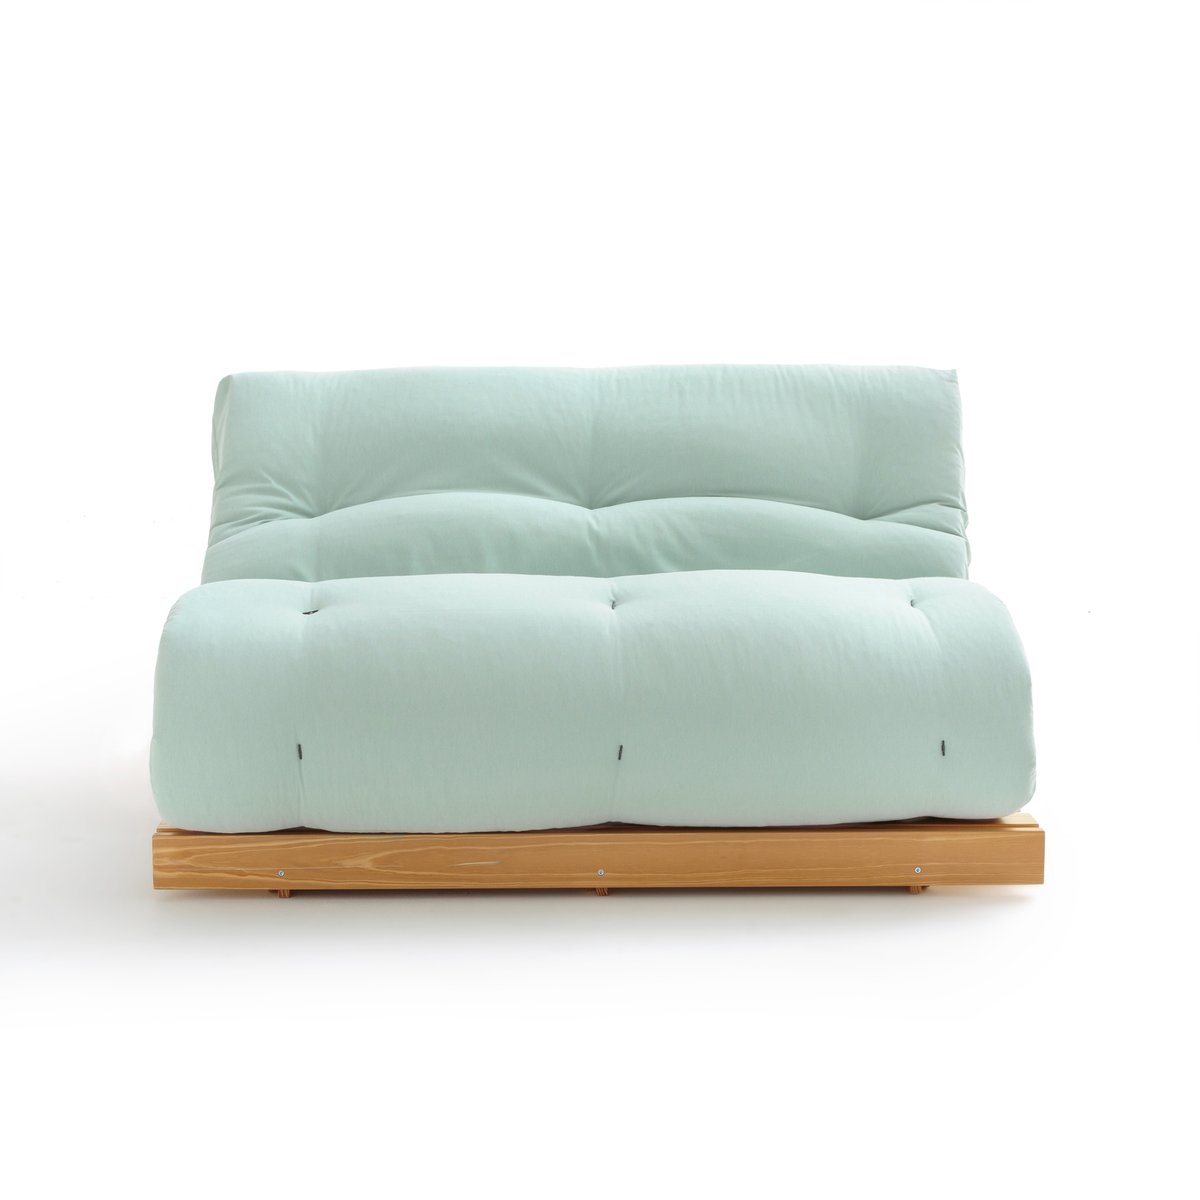 Матрас-футон LaRedoute Latex с чехлом из льна для дивана THA 90 x 190 см зеленый, размер 90 x 190 см - фото 1